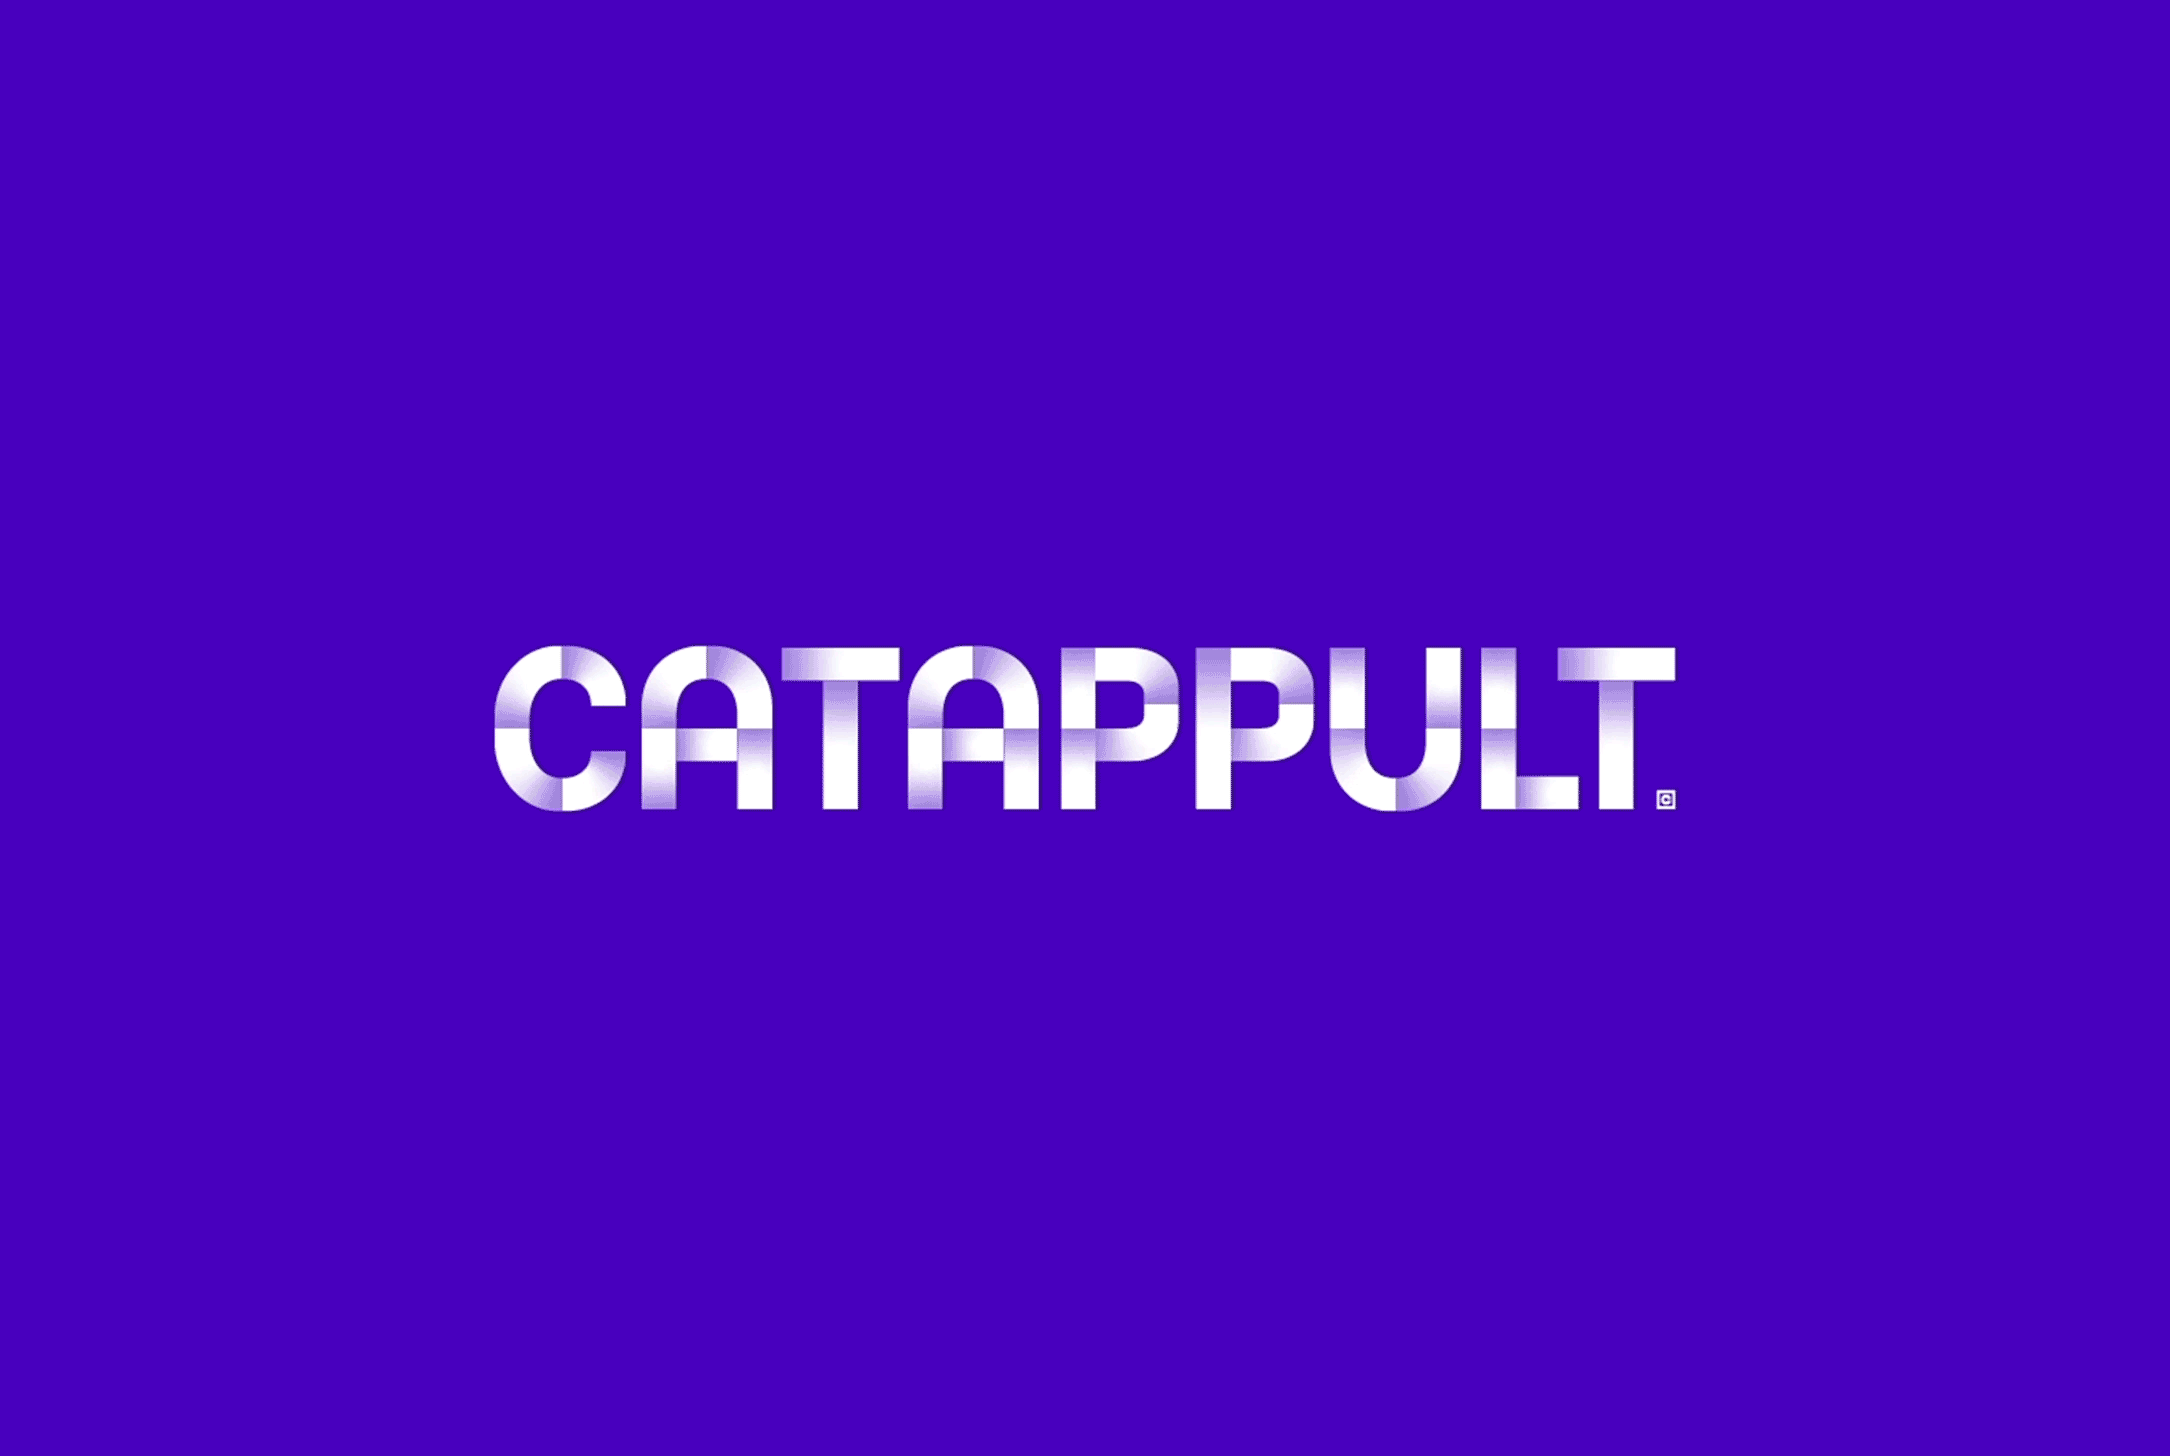 Catappult — Branding a breakthrough in the world of Apps